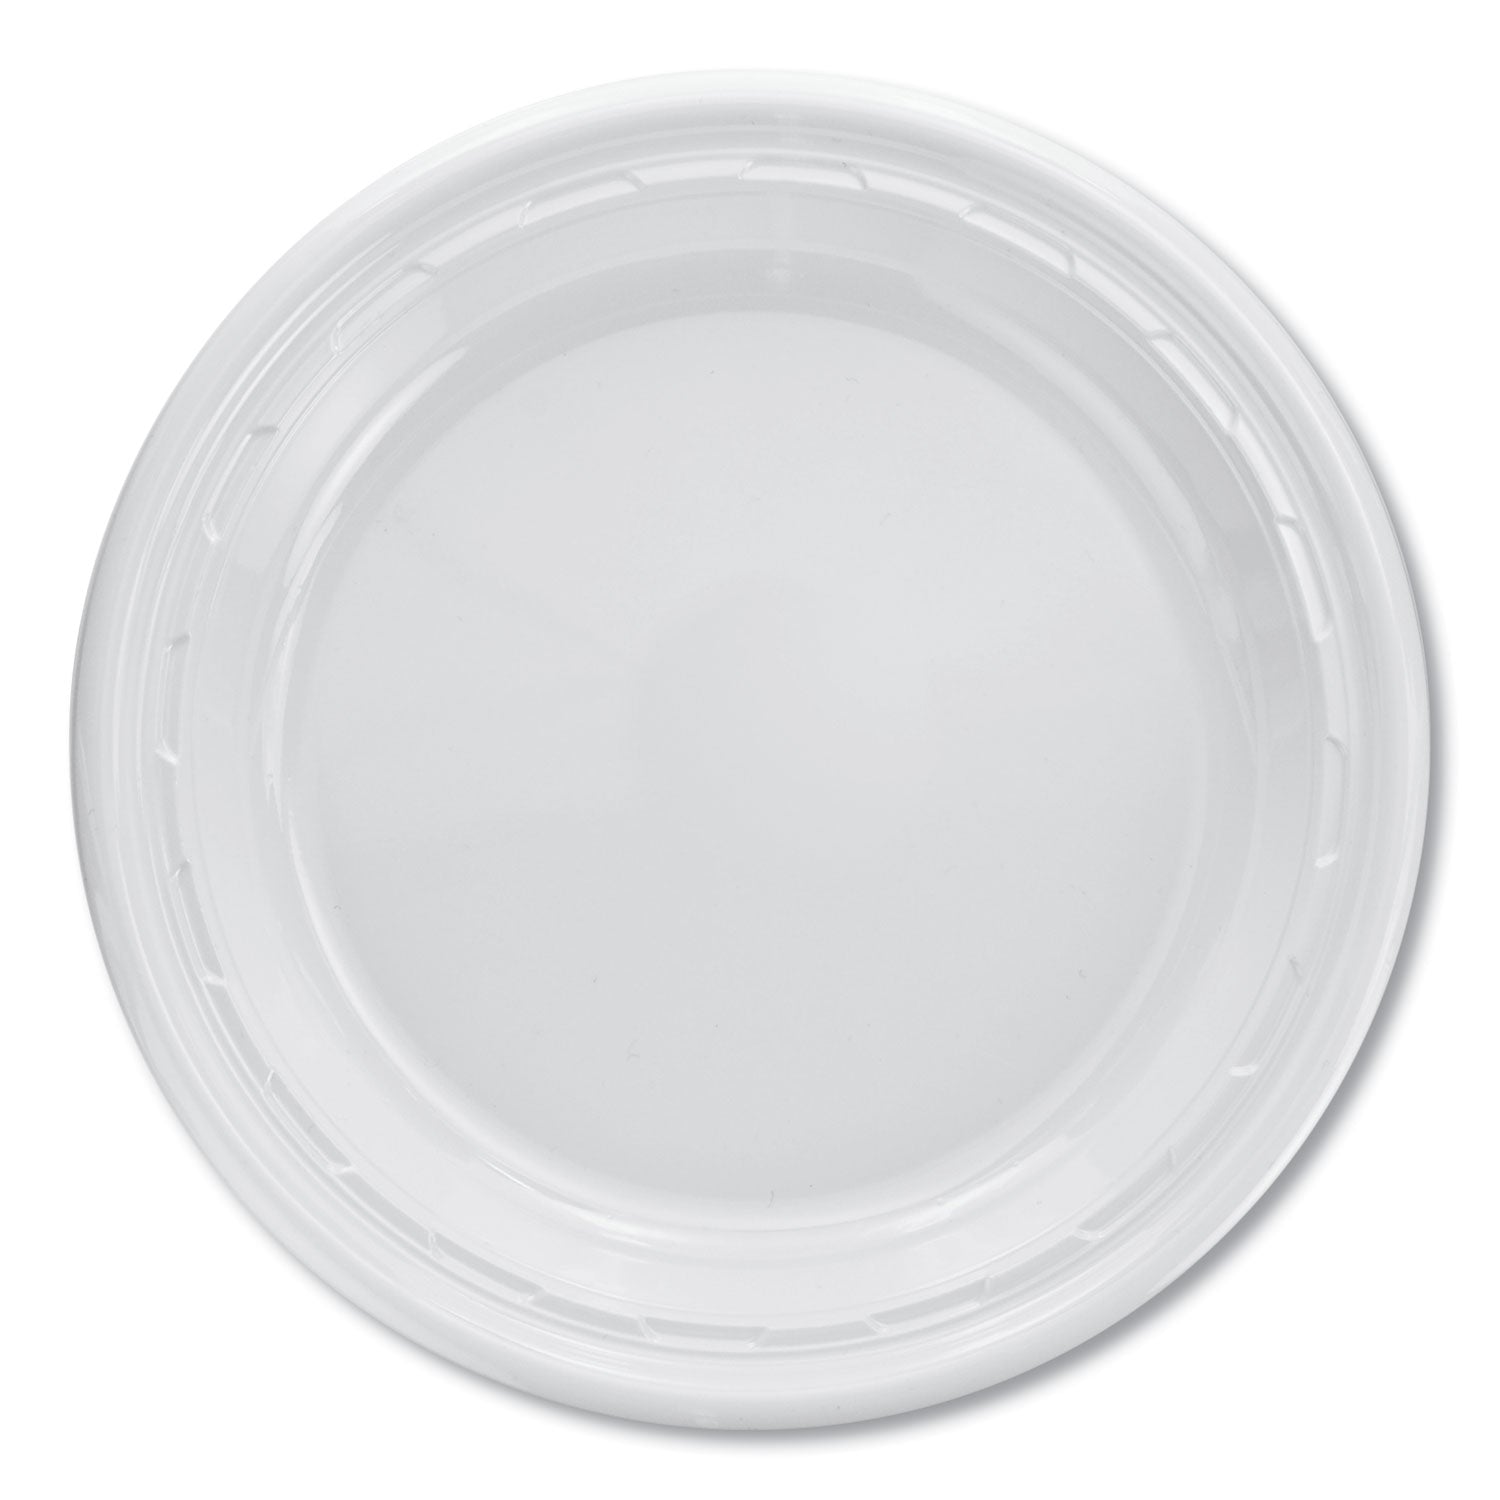 Famous Service Impact Plastic Dinnerware, Plate, 10.25" dia, White, 500/Carton - 